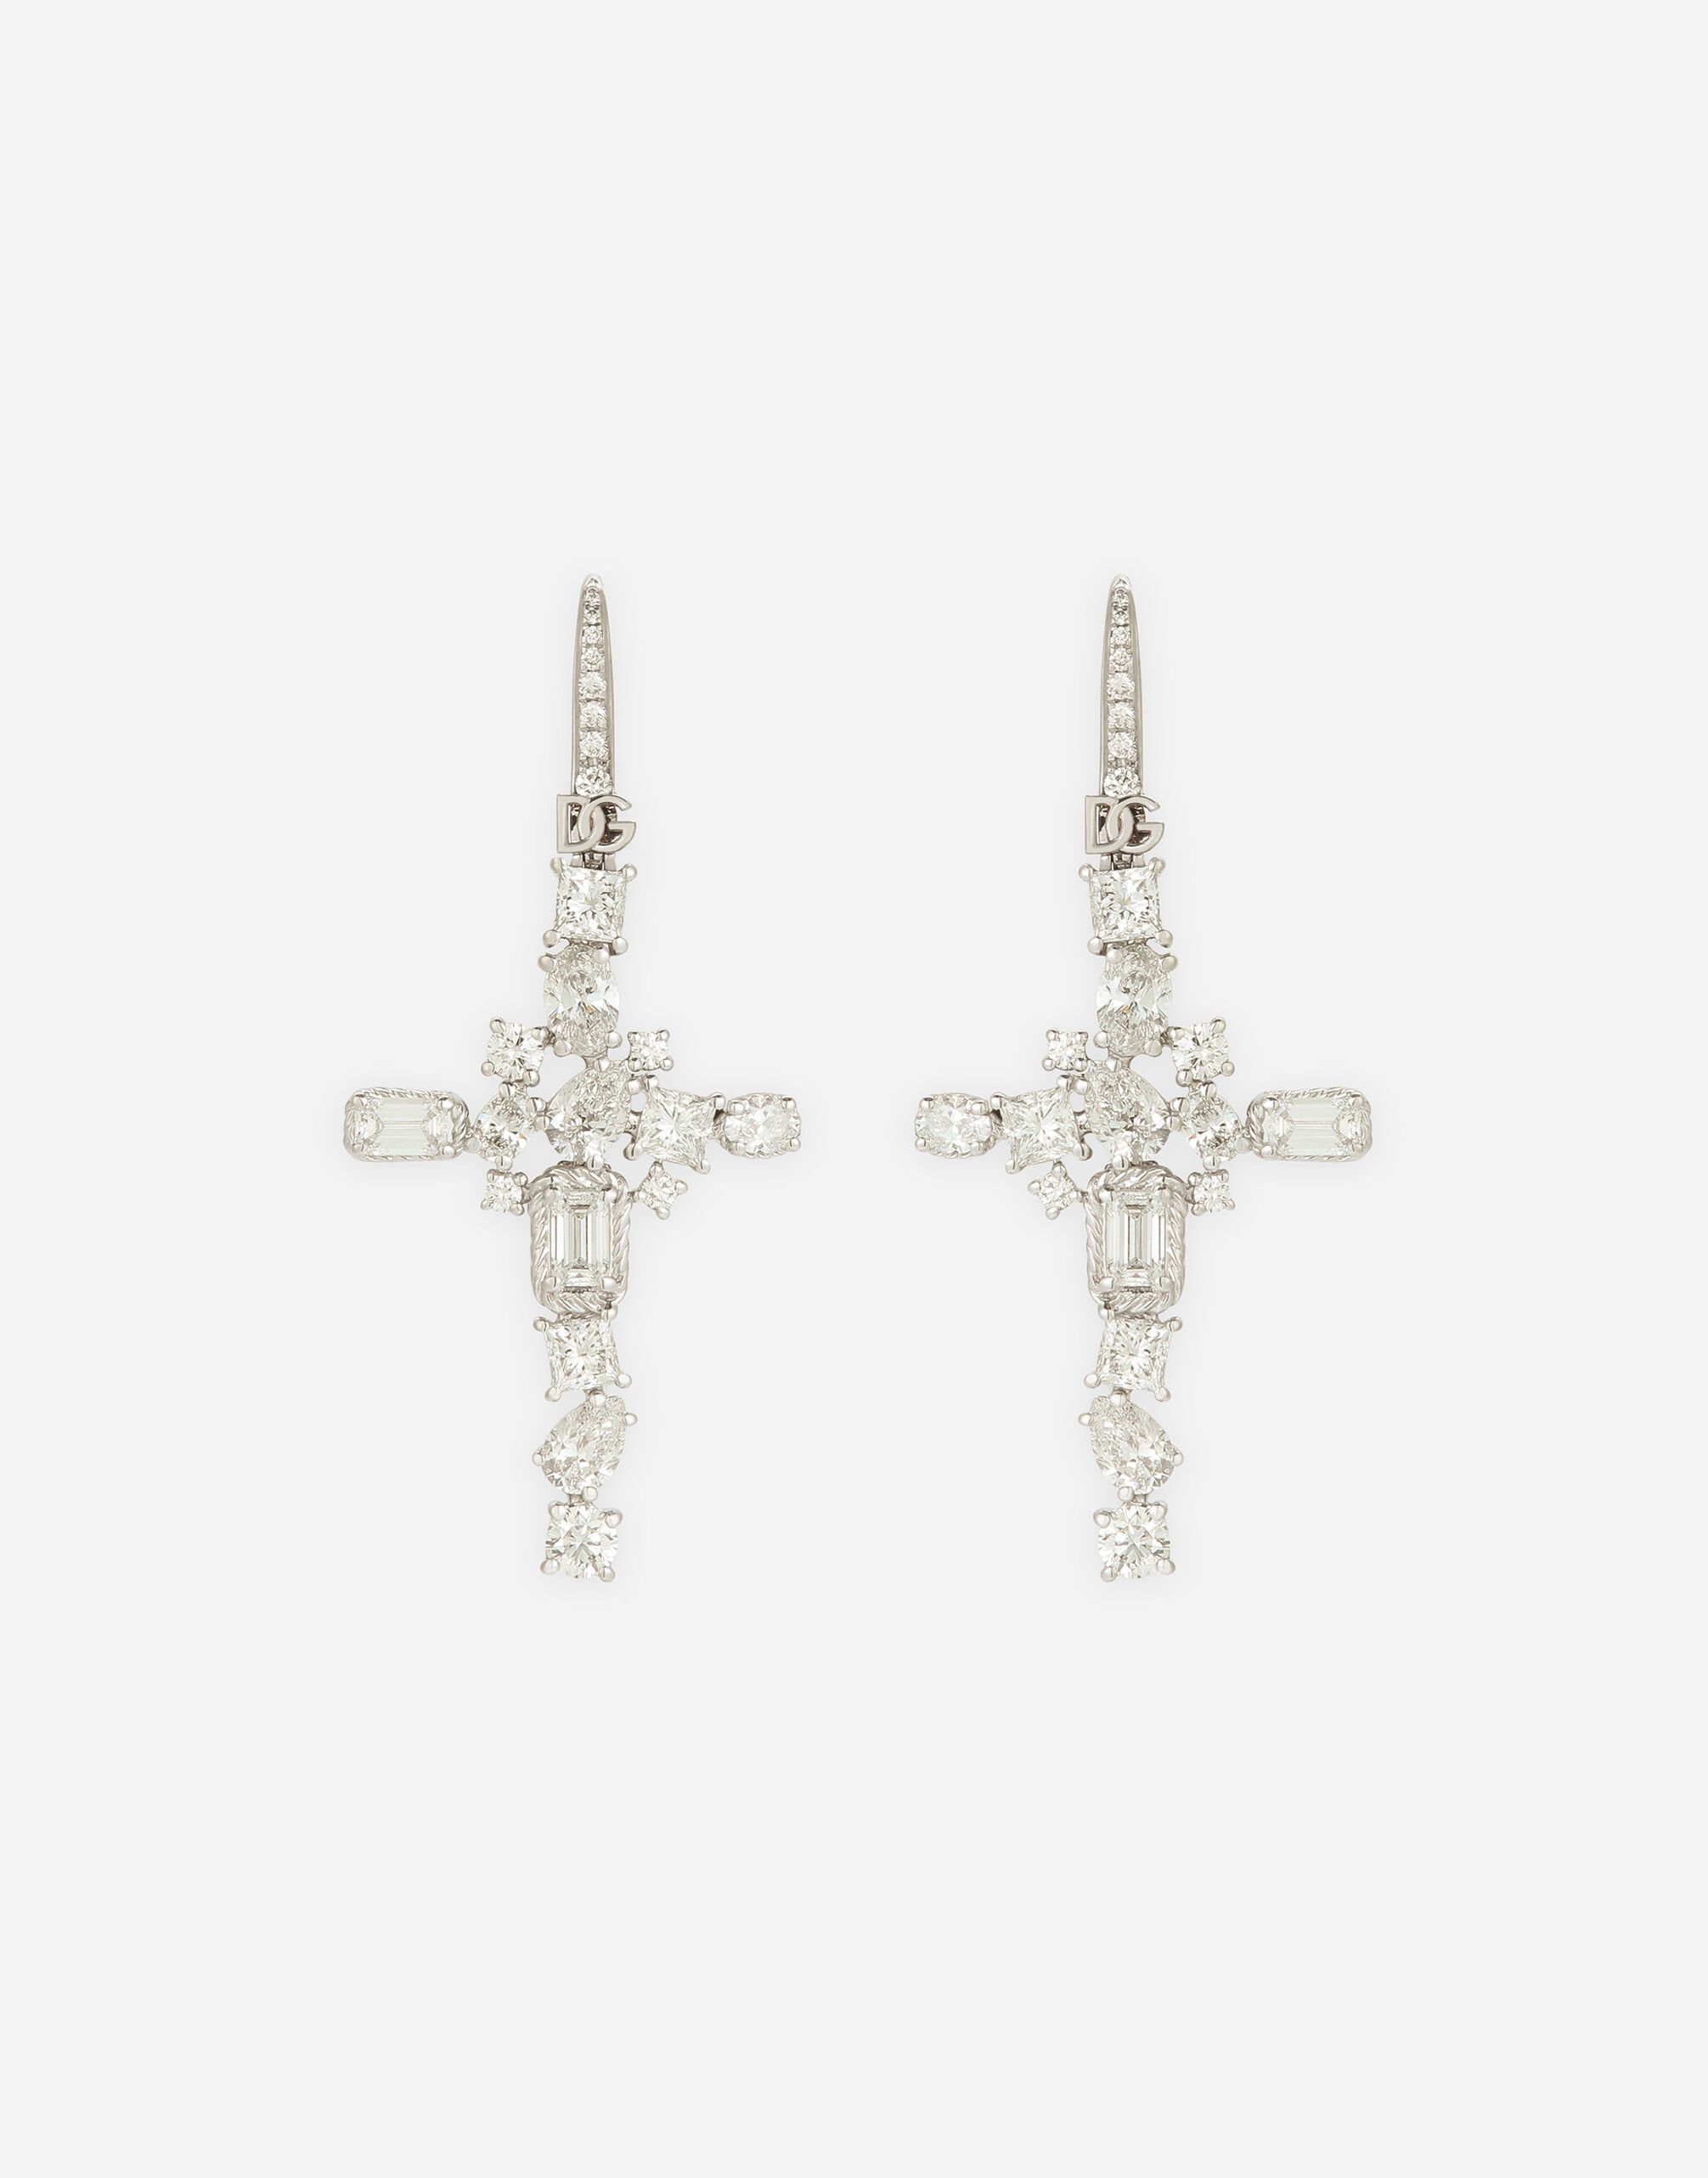 Dolce & Gabbana Easy Diamond earrings in white gold 18Kt diamonds Gold WSQB1GWPE01